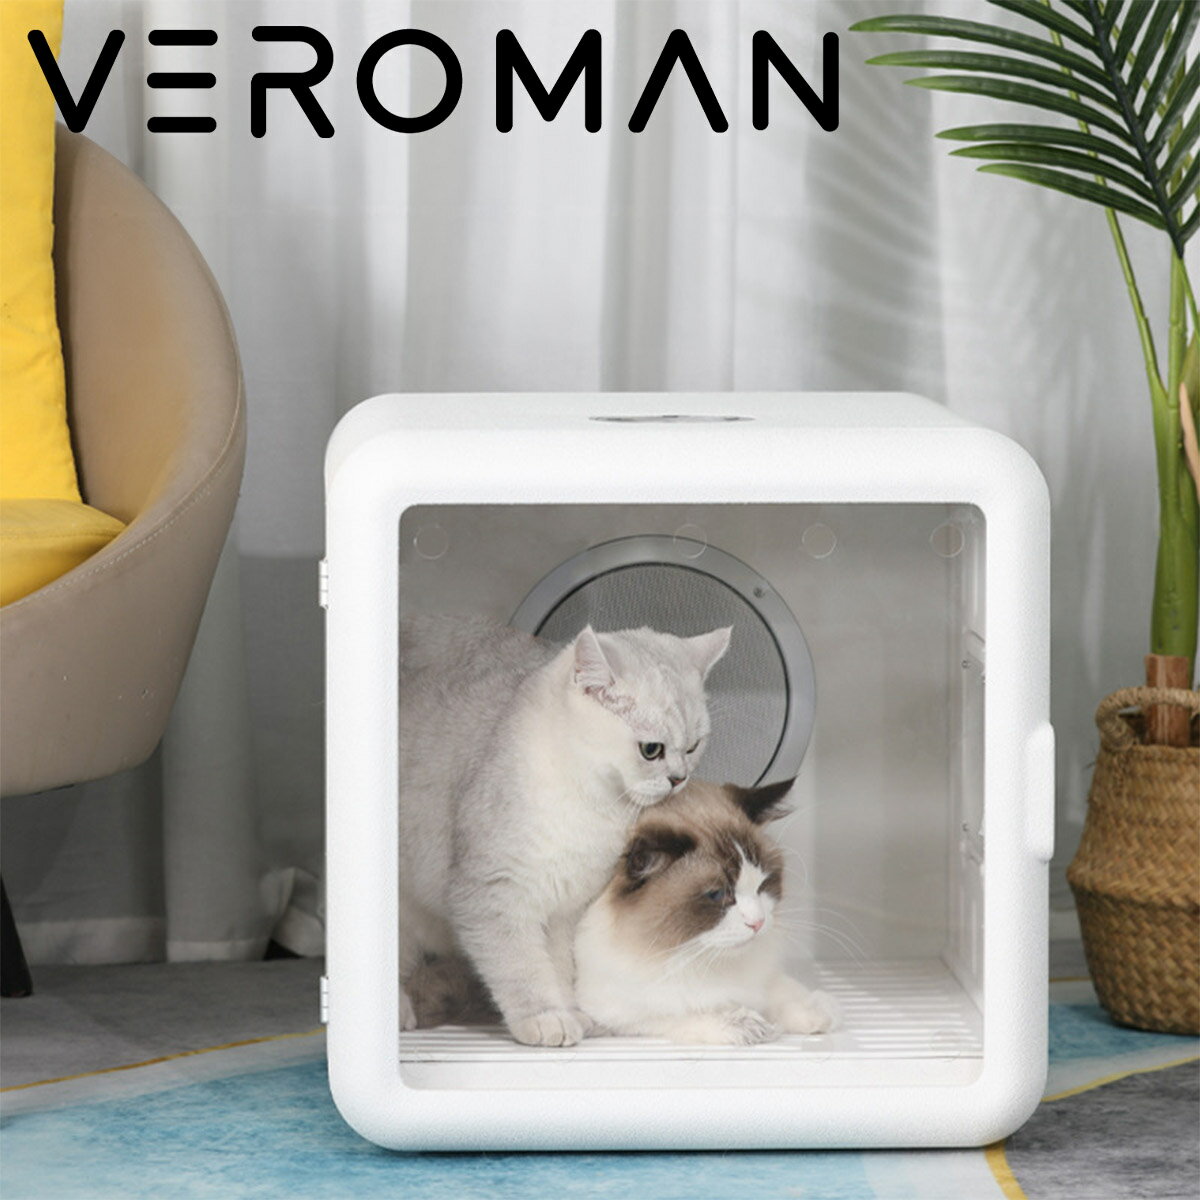 VeroMan ドライハウス ペットドライヤー ドライボックス ペットドライ 犬 猫 65L大容量 静音 16-45℃温度調節可能 1200w 速乾 自動 ドライヤールーム